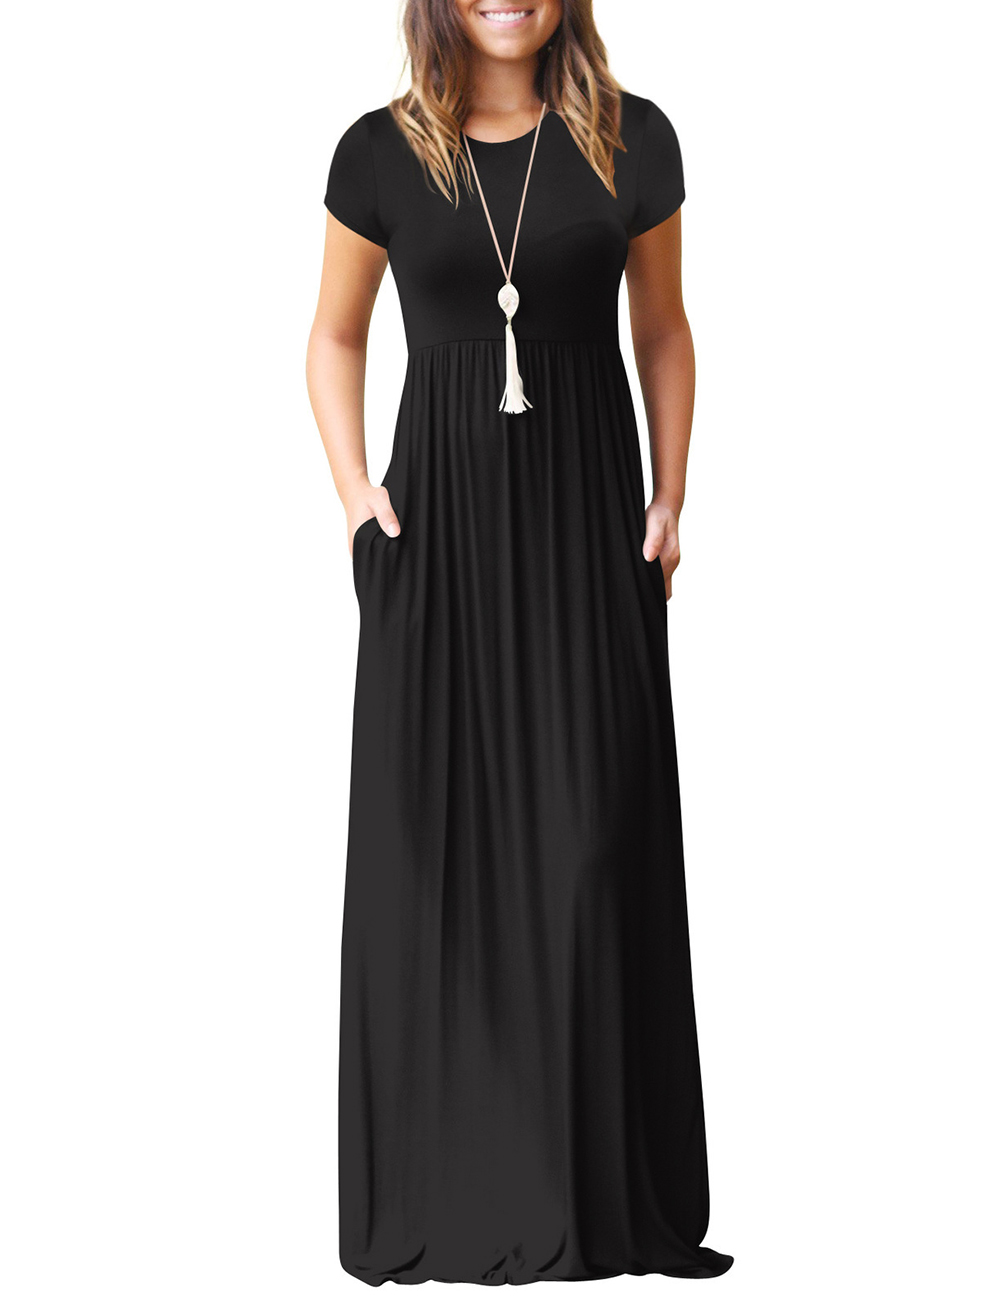 UKAP Short Sleeve Dresses for Women Plus Size Solid Color Sundress ...